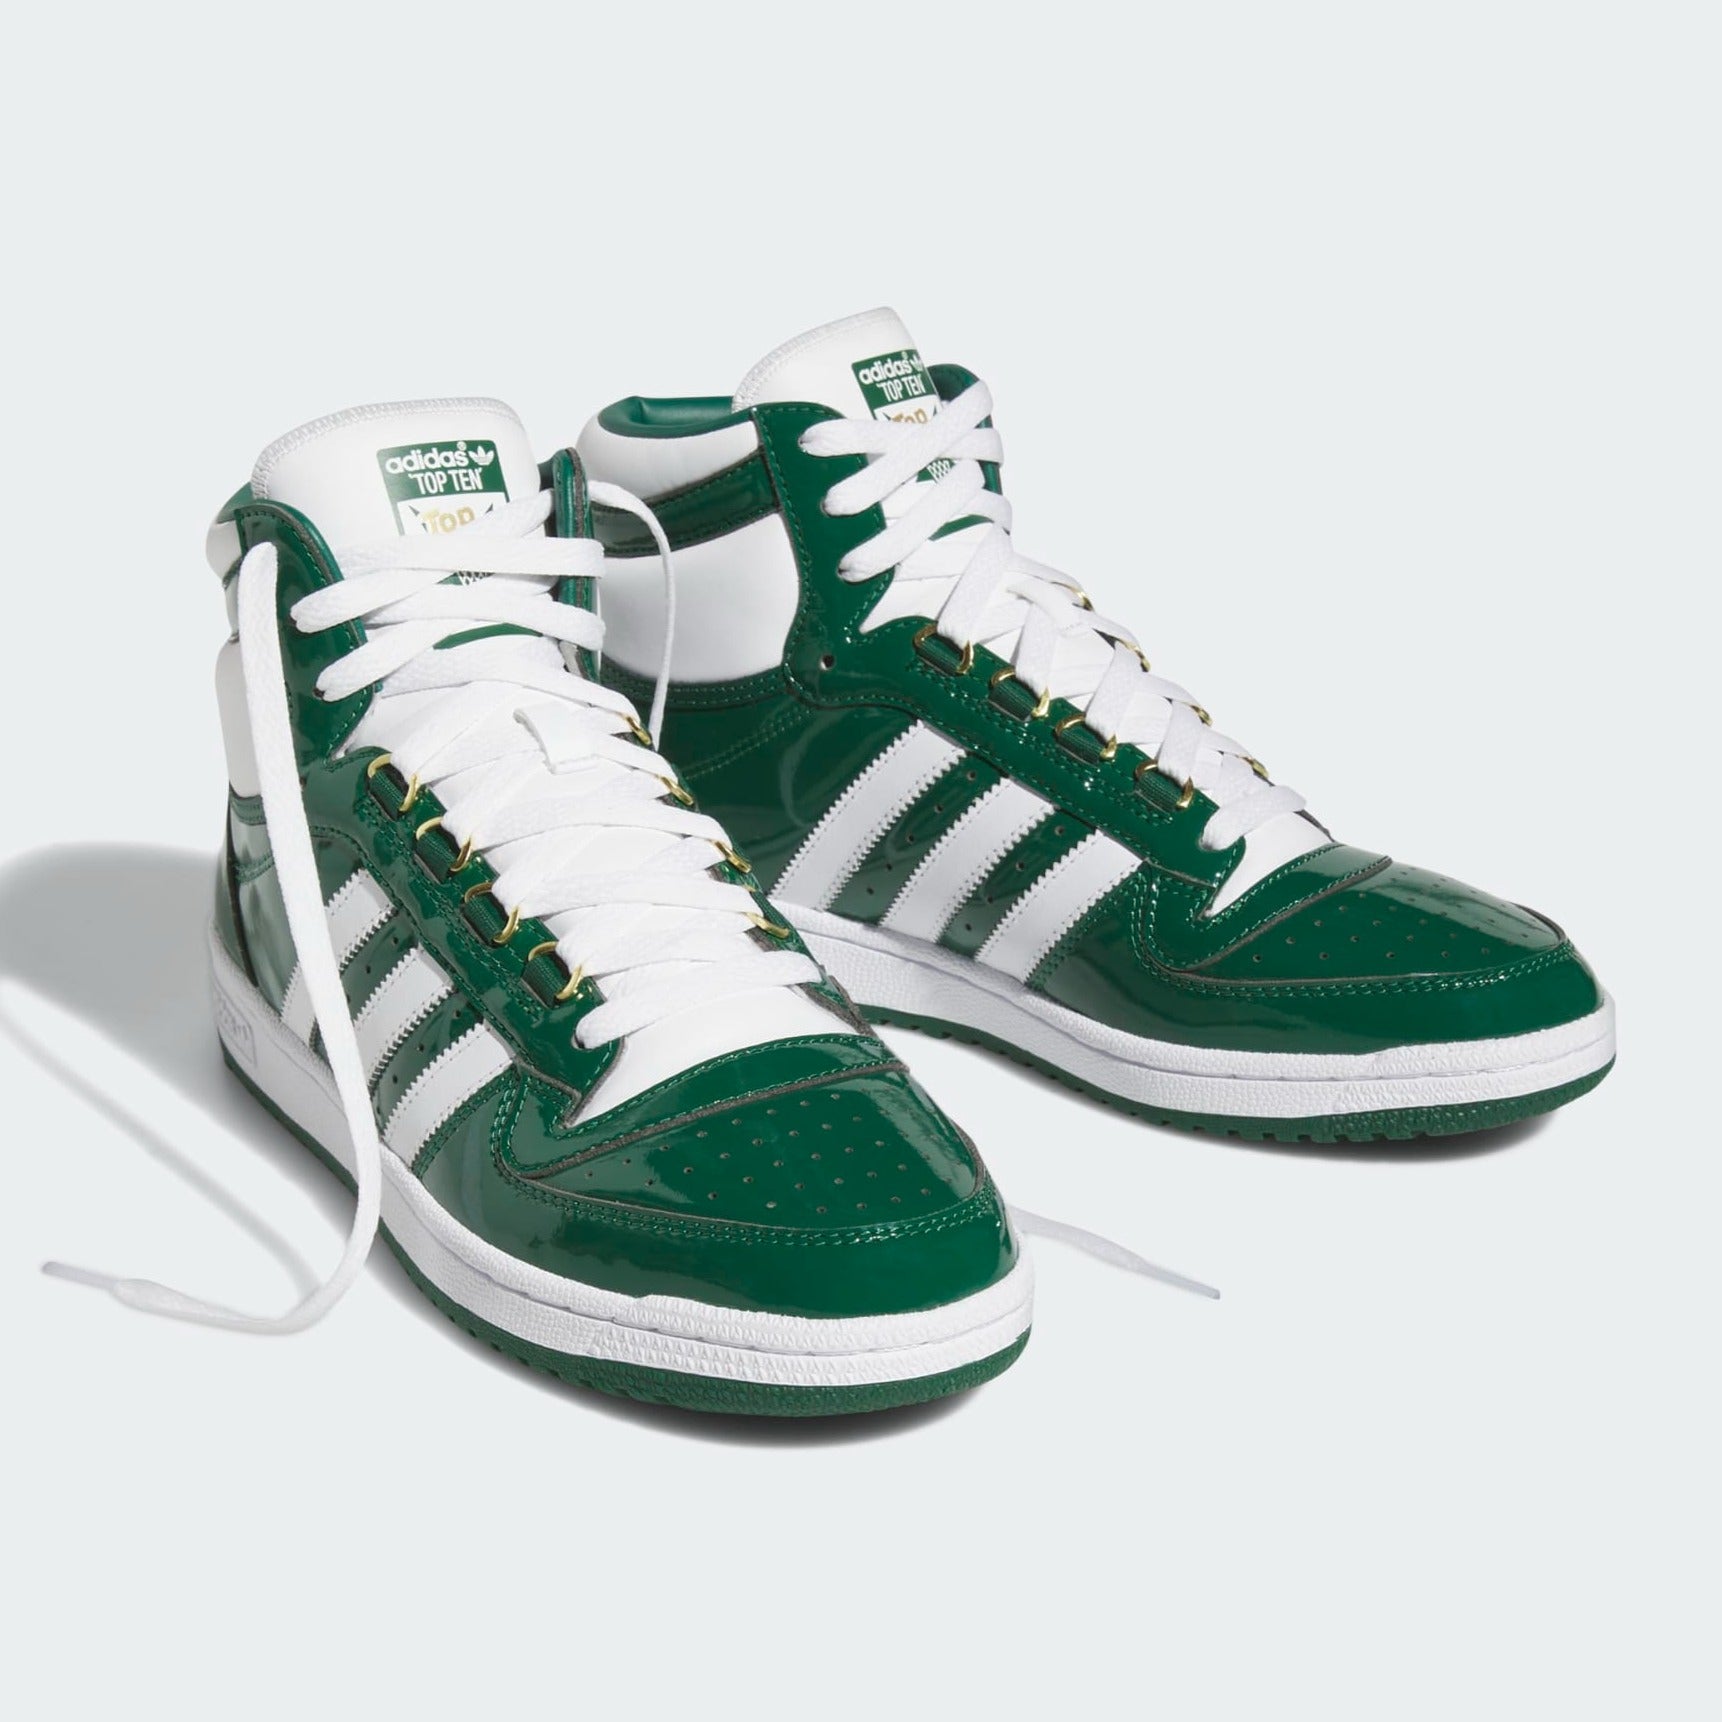 Adidas Top Ten Patent Green White - Reds